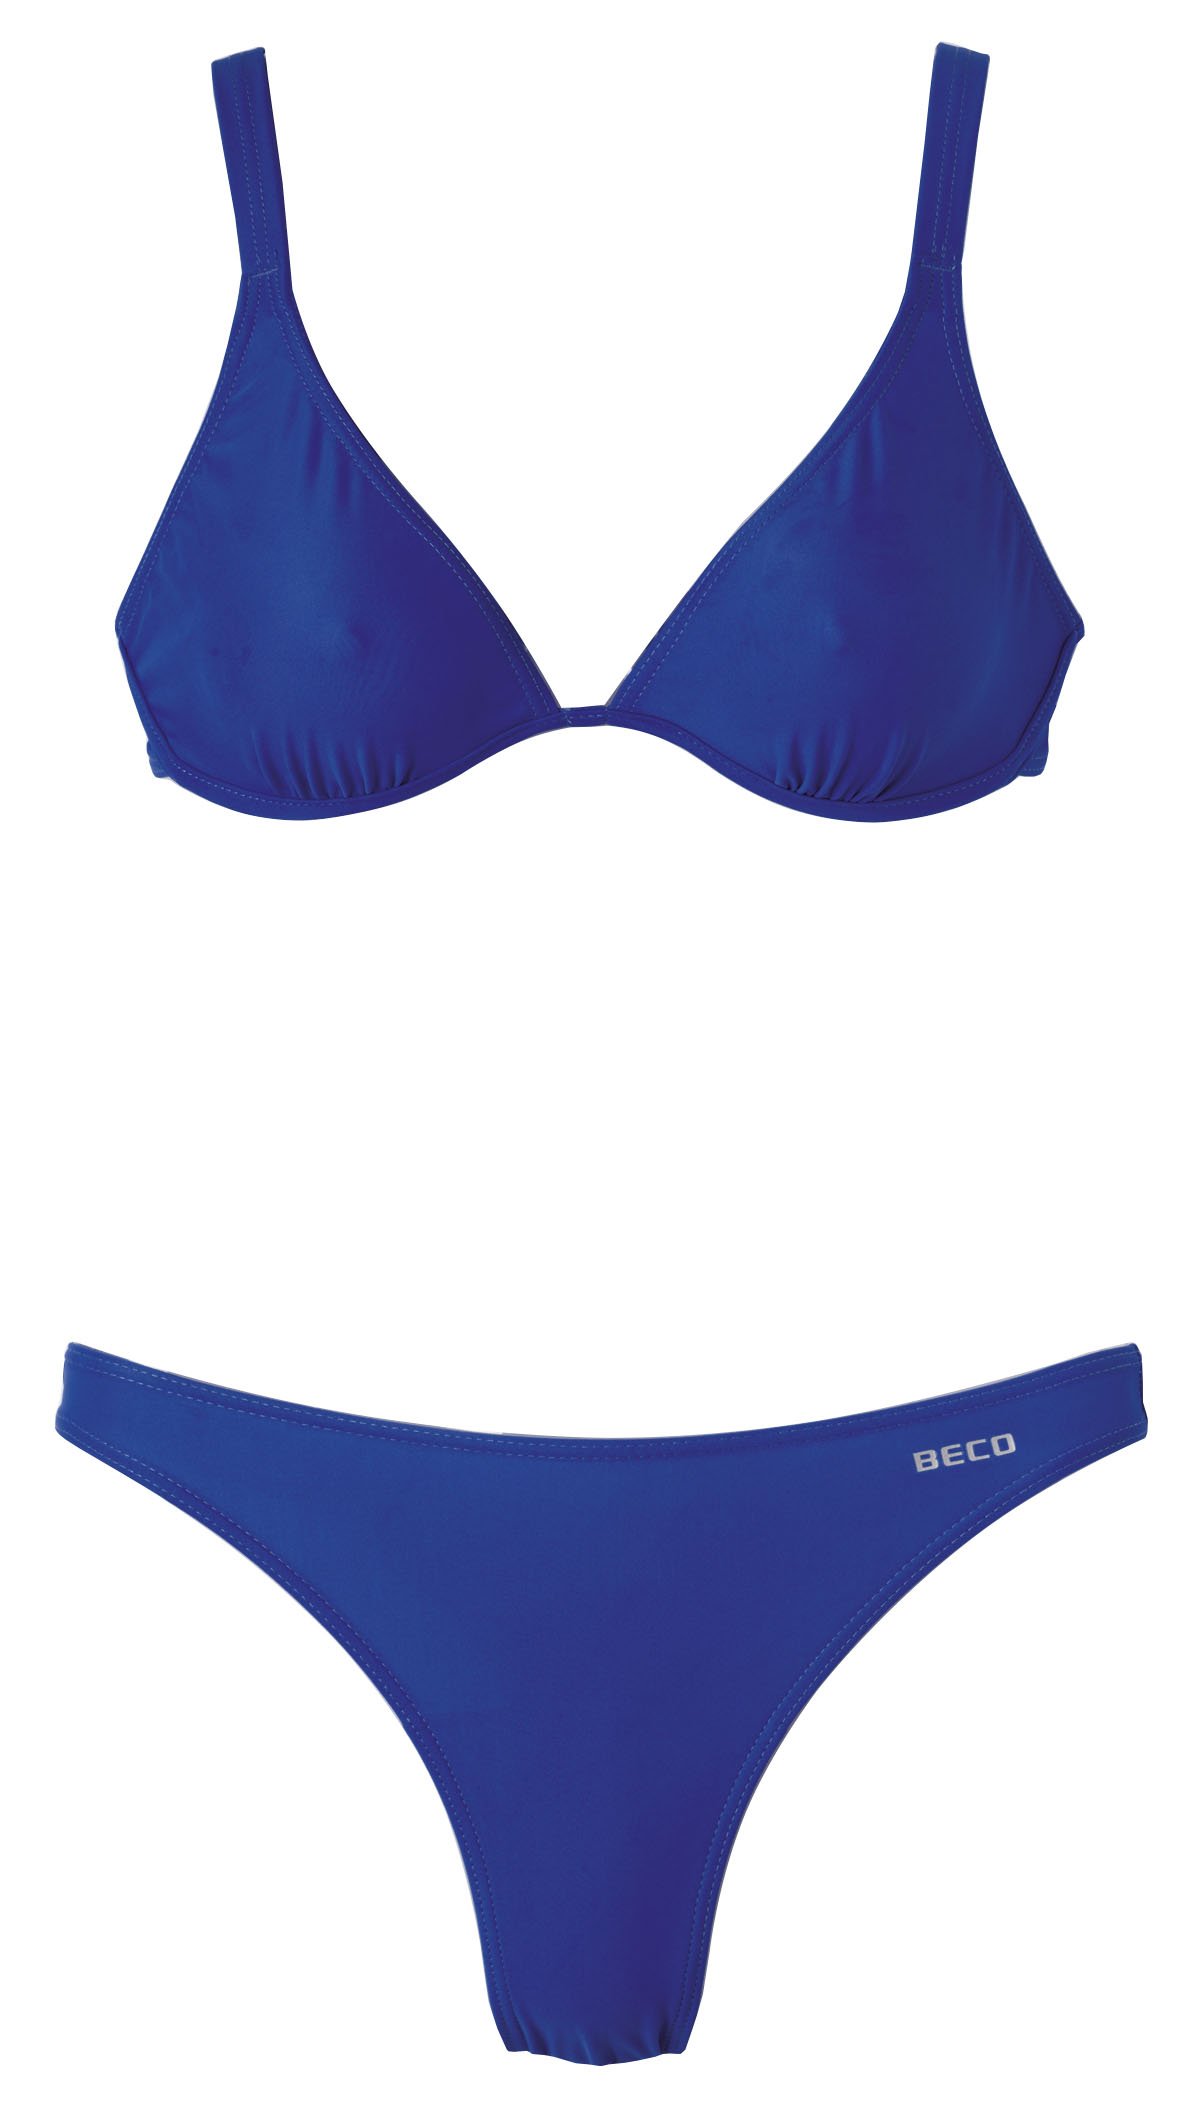 Beco Damen Schwimmkleidung Bügel Bikini, blau, 38